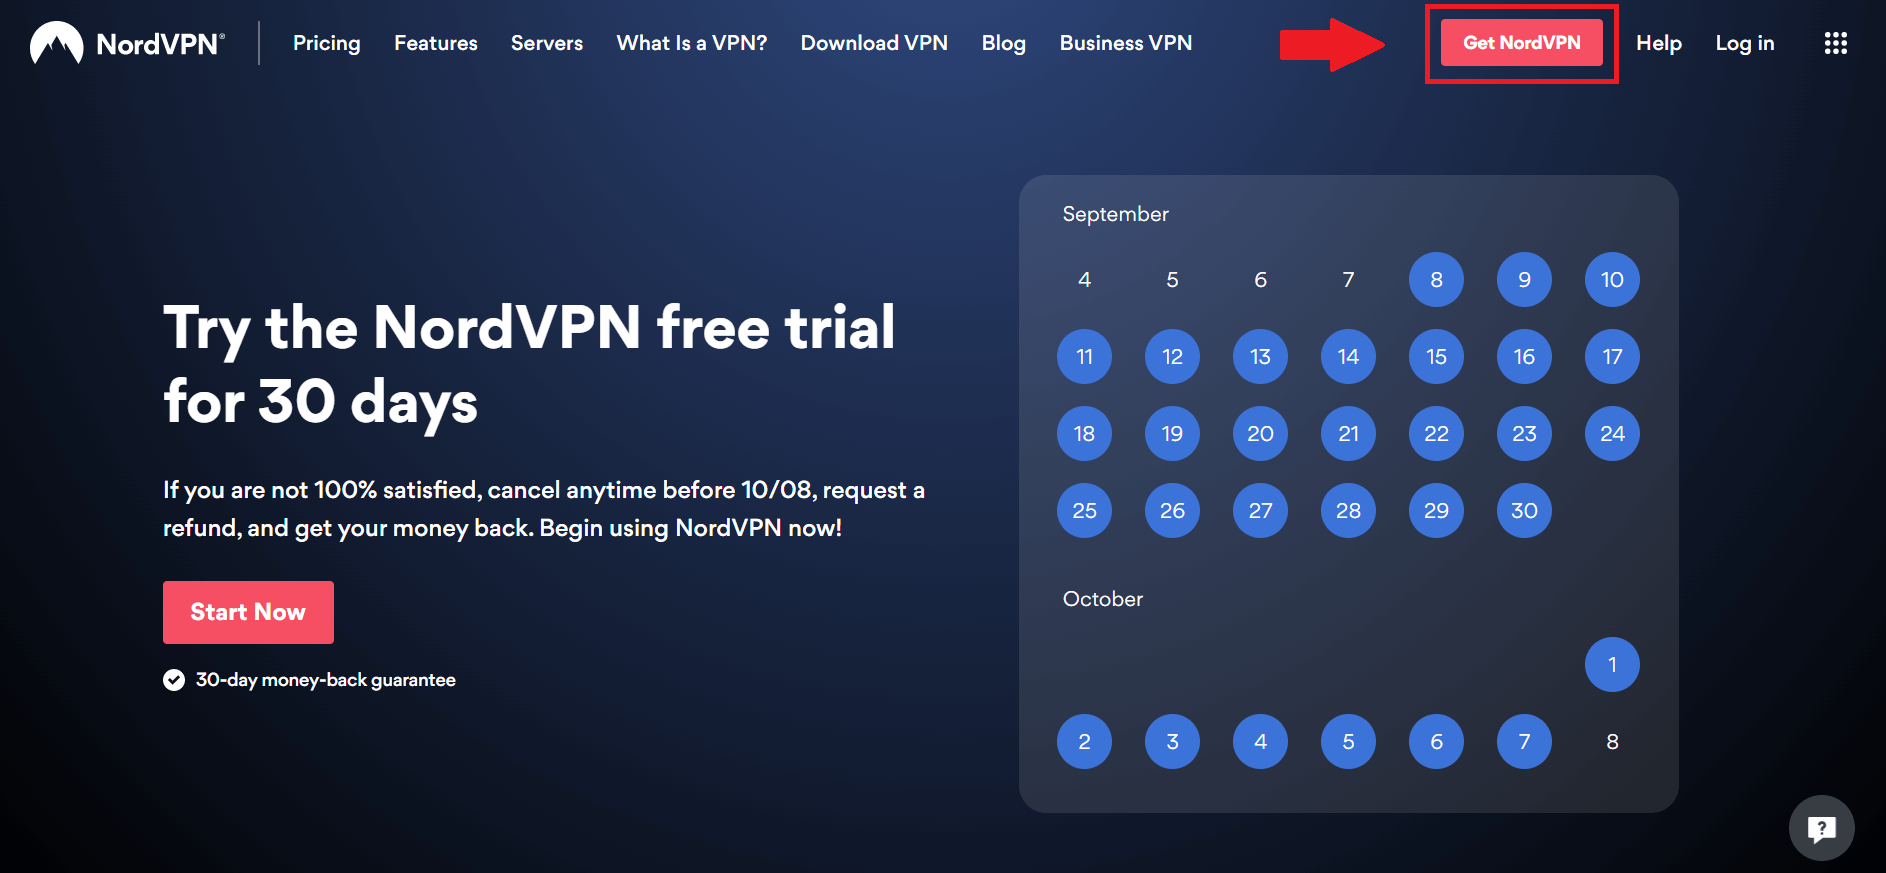 visit-the-nordvpn-website-and-click-get-nordvpn